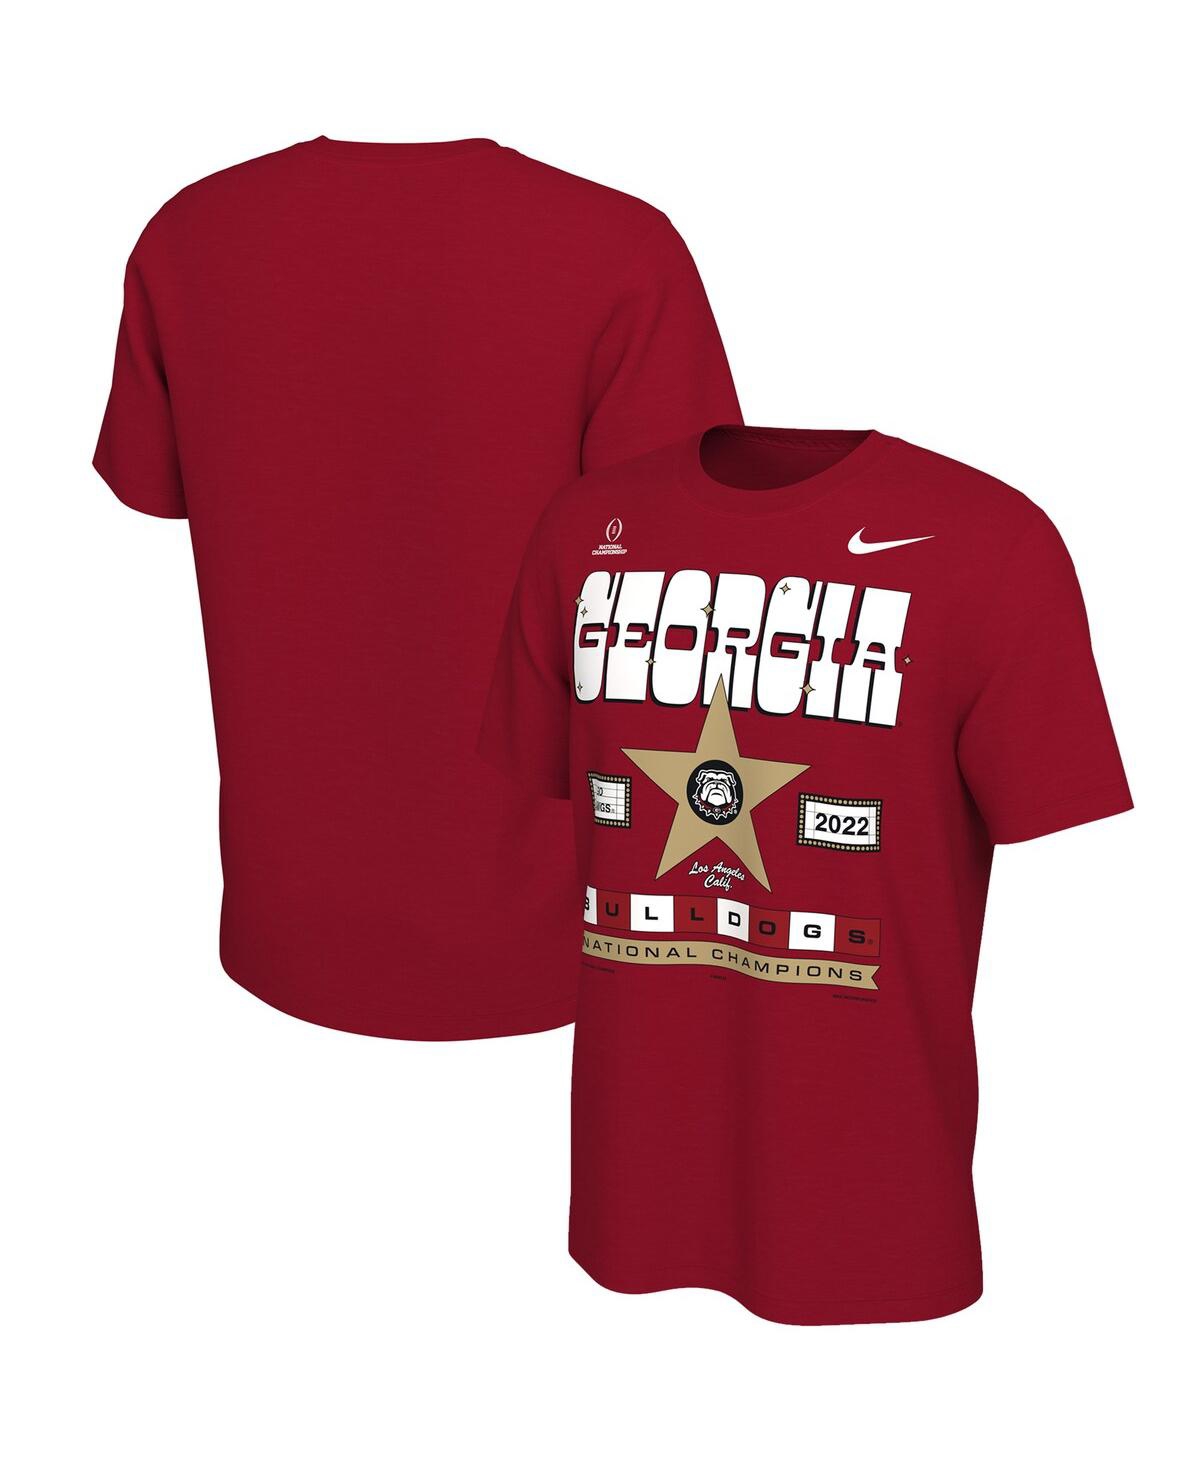 Shop Nike Men's  Red Georgia Bulldogs College Football Playoff 2022 National Champions Celebration T-shirt